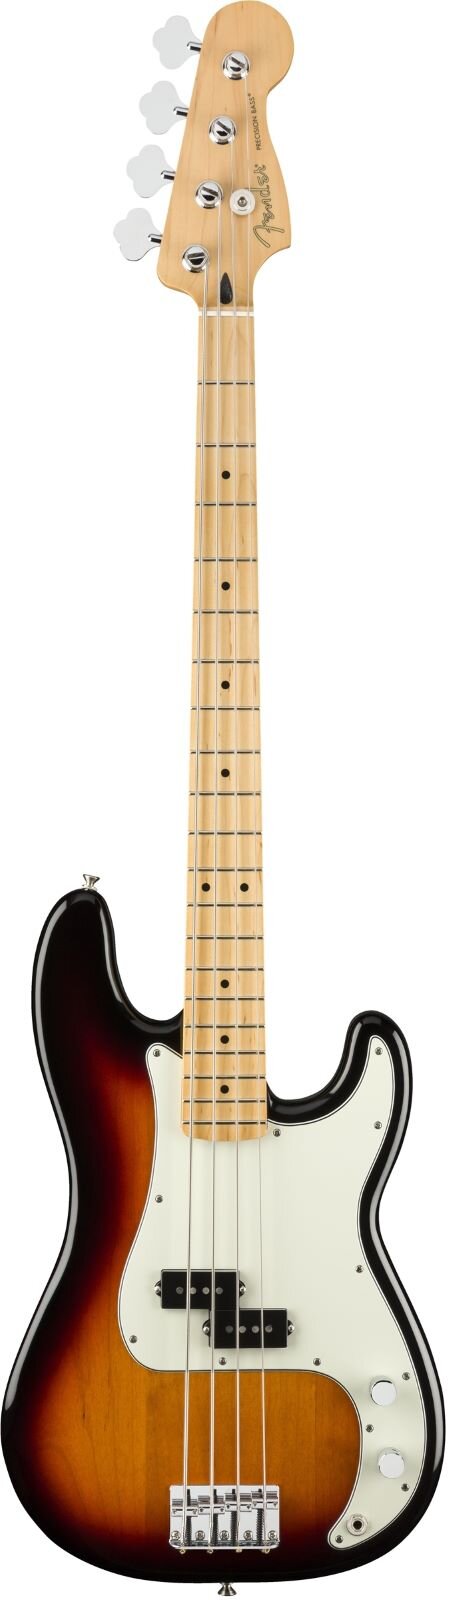 Fender Player Precision Bass Maple Griffbrett 3-Color Sunburst : photo 1